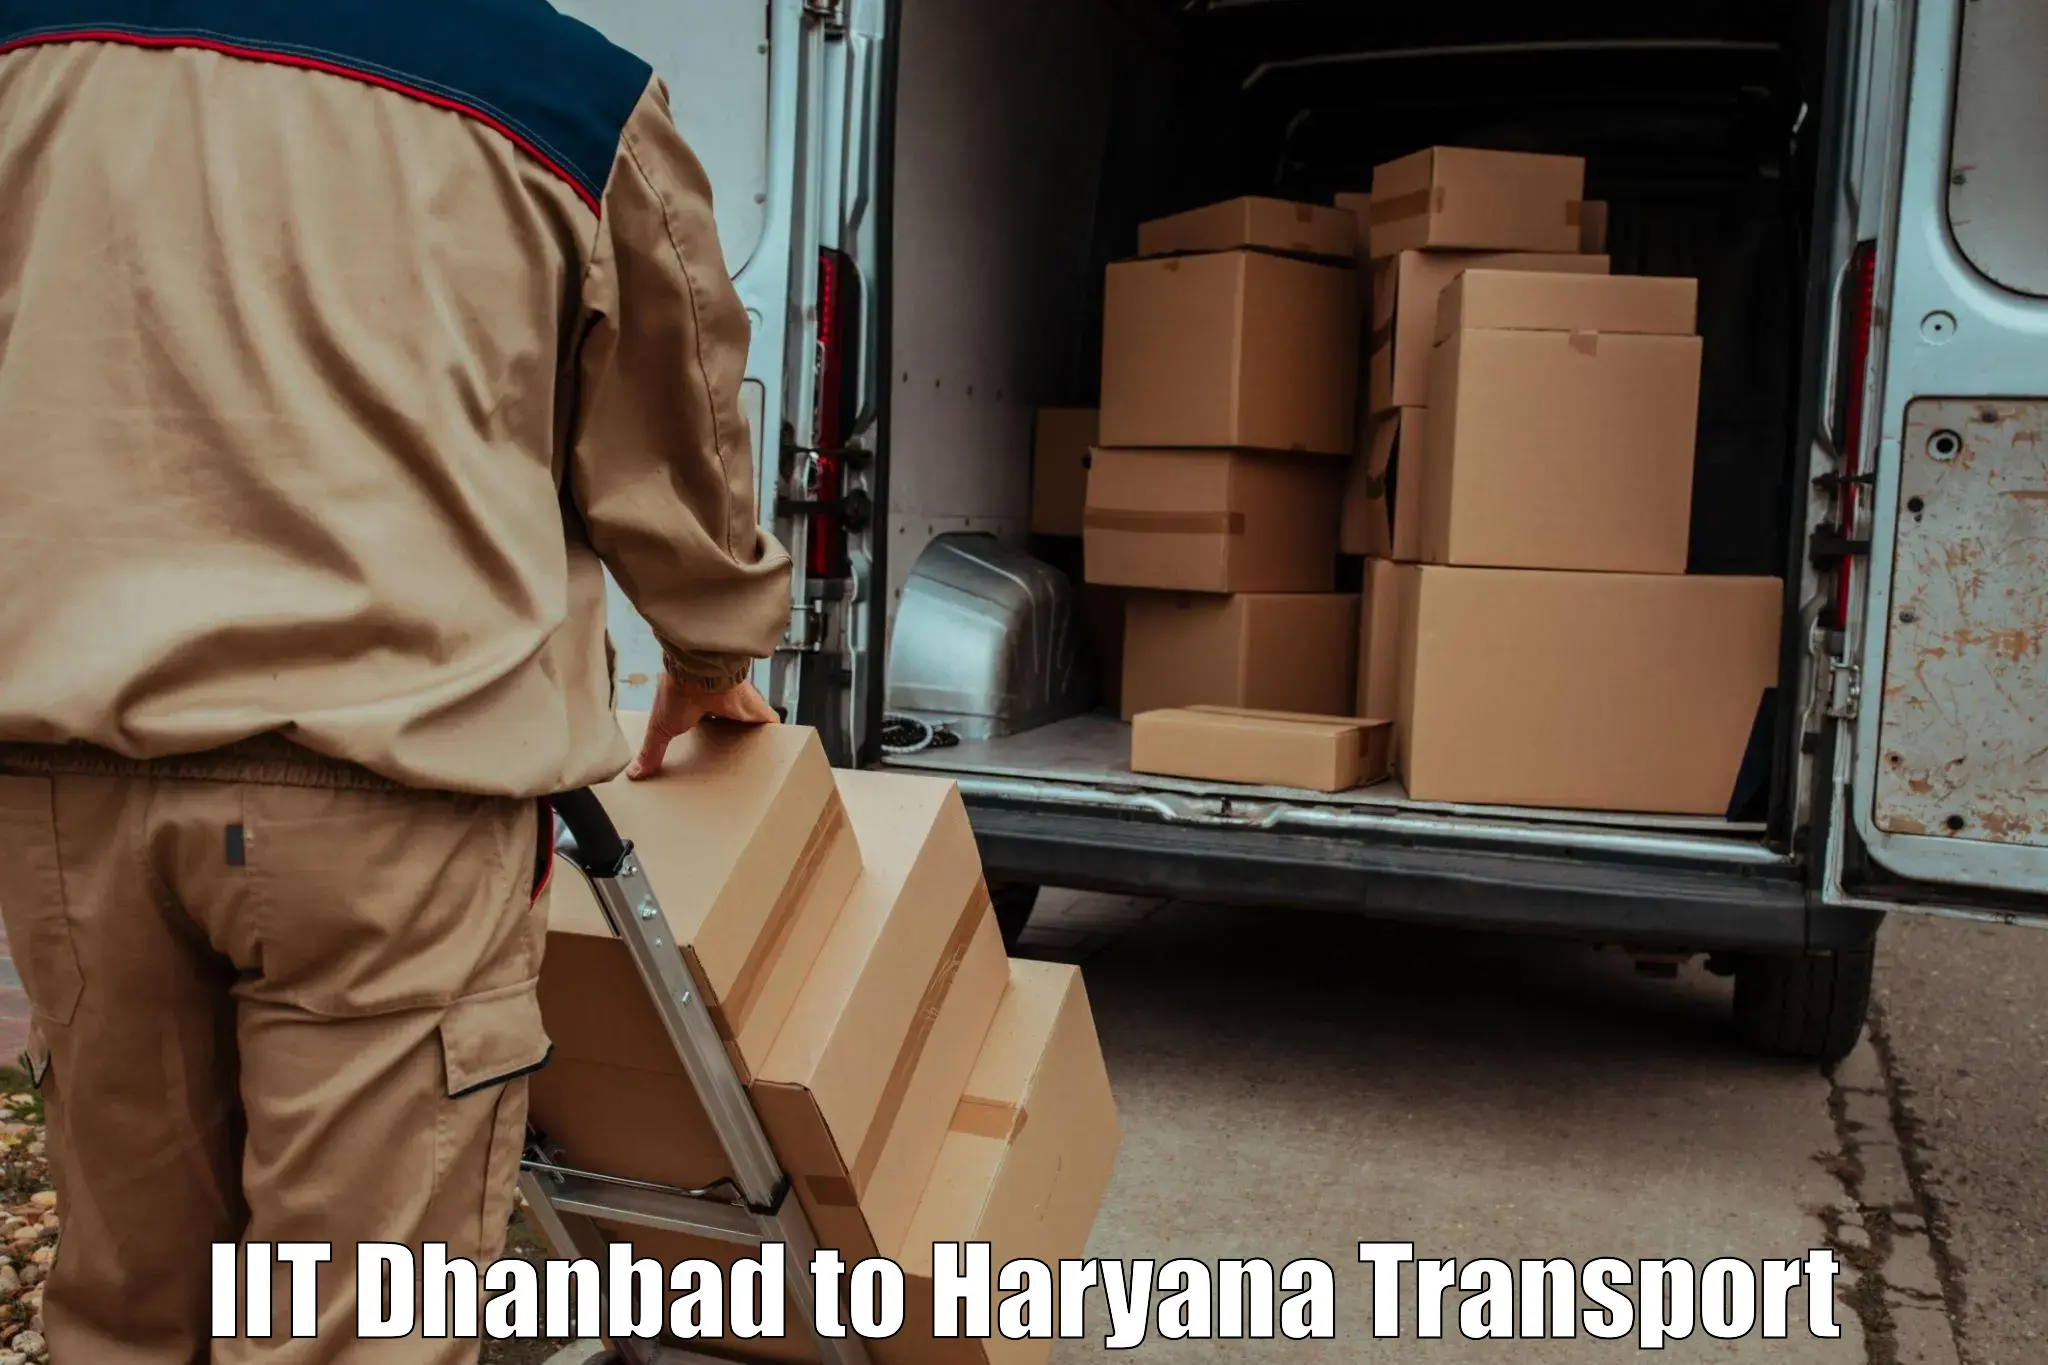 Pick up transport service IIT Dhanbad to Jhajjar